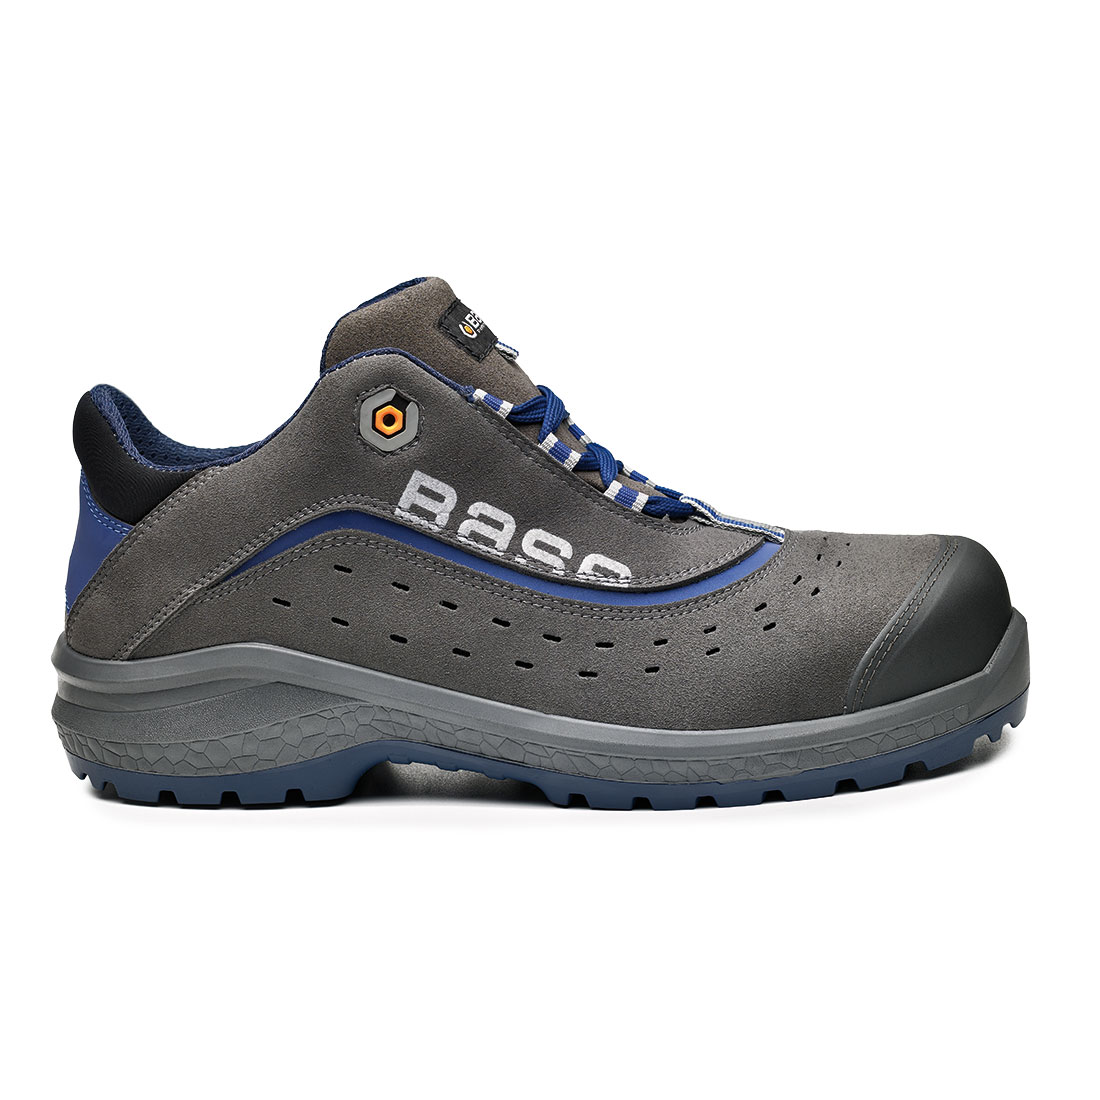 Base Be-Light Low Shoes Grey/Blue B0884